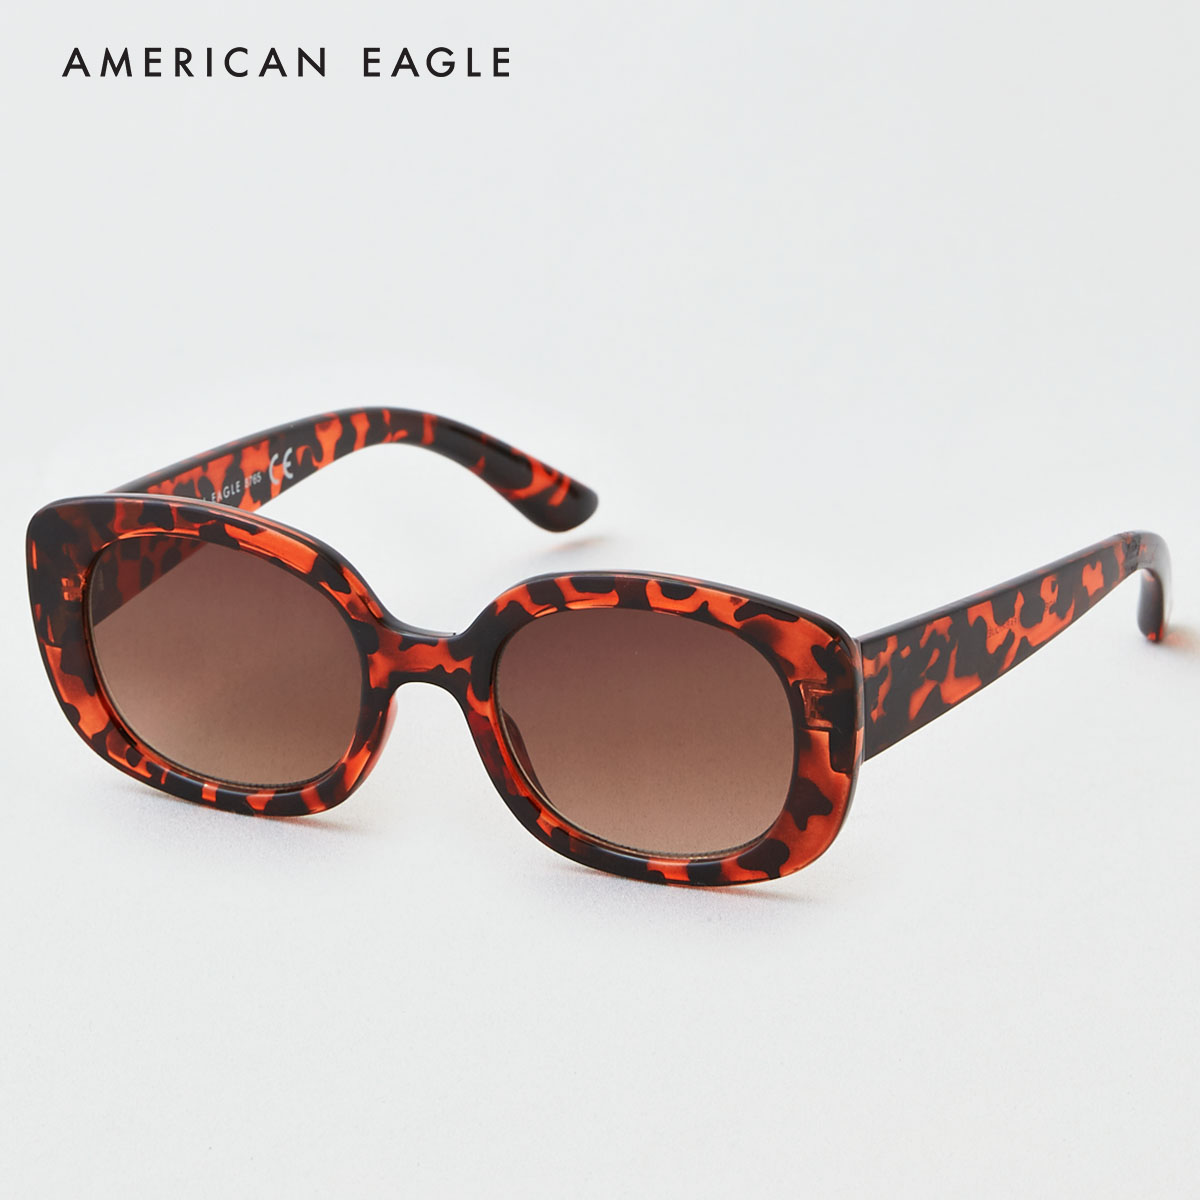 American Eagle Tortoise Square Plastic Sunglasses แว่นตา ผู้หญิง แฟชั่น(048-8765-251)